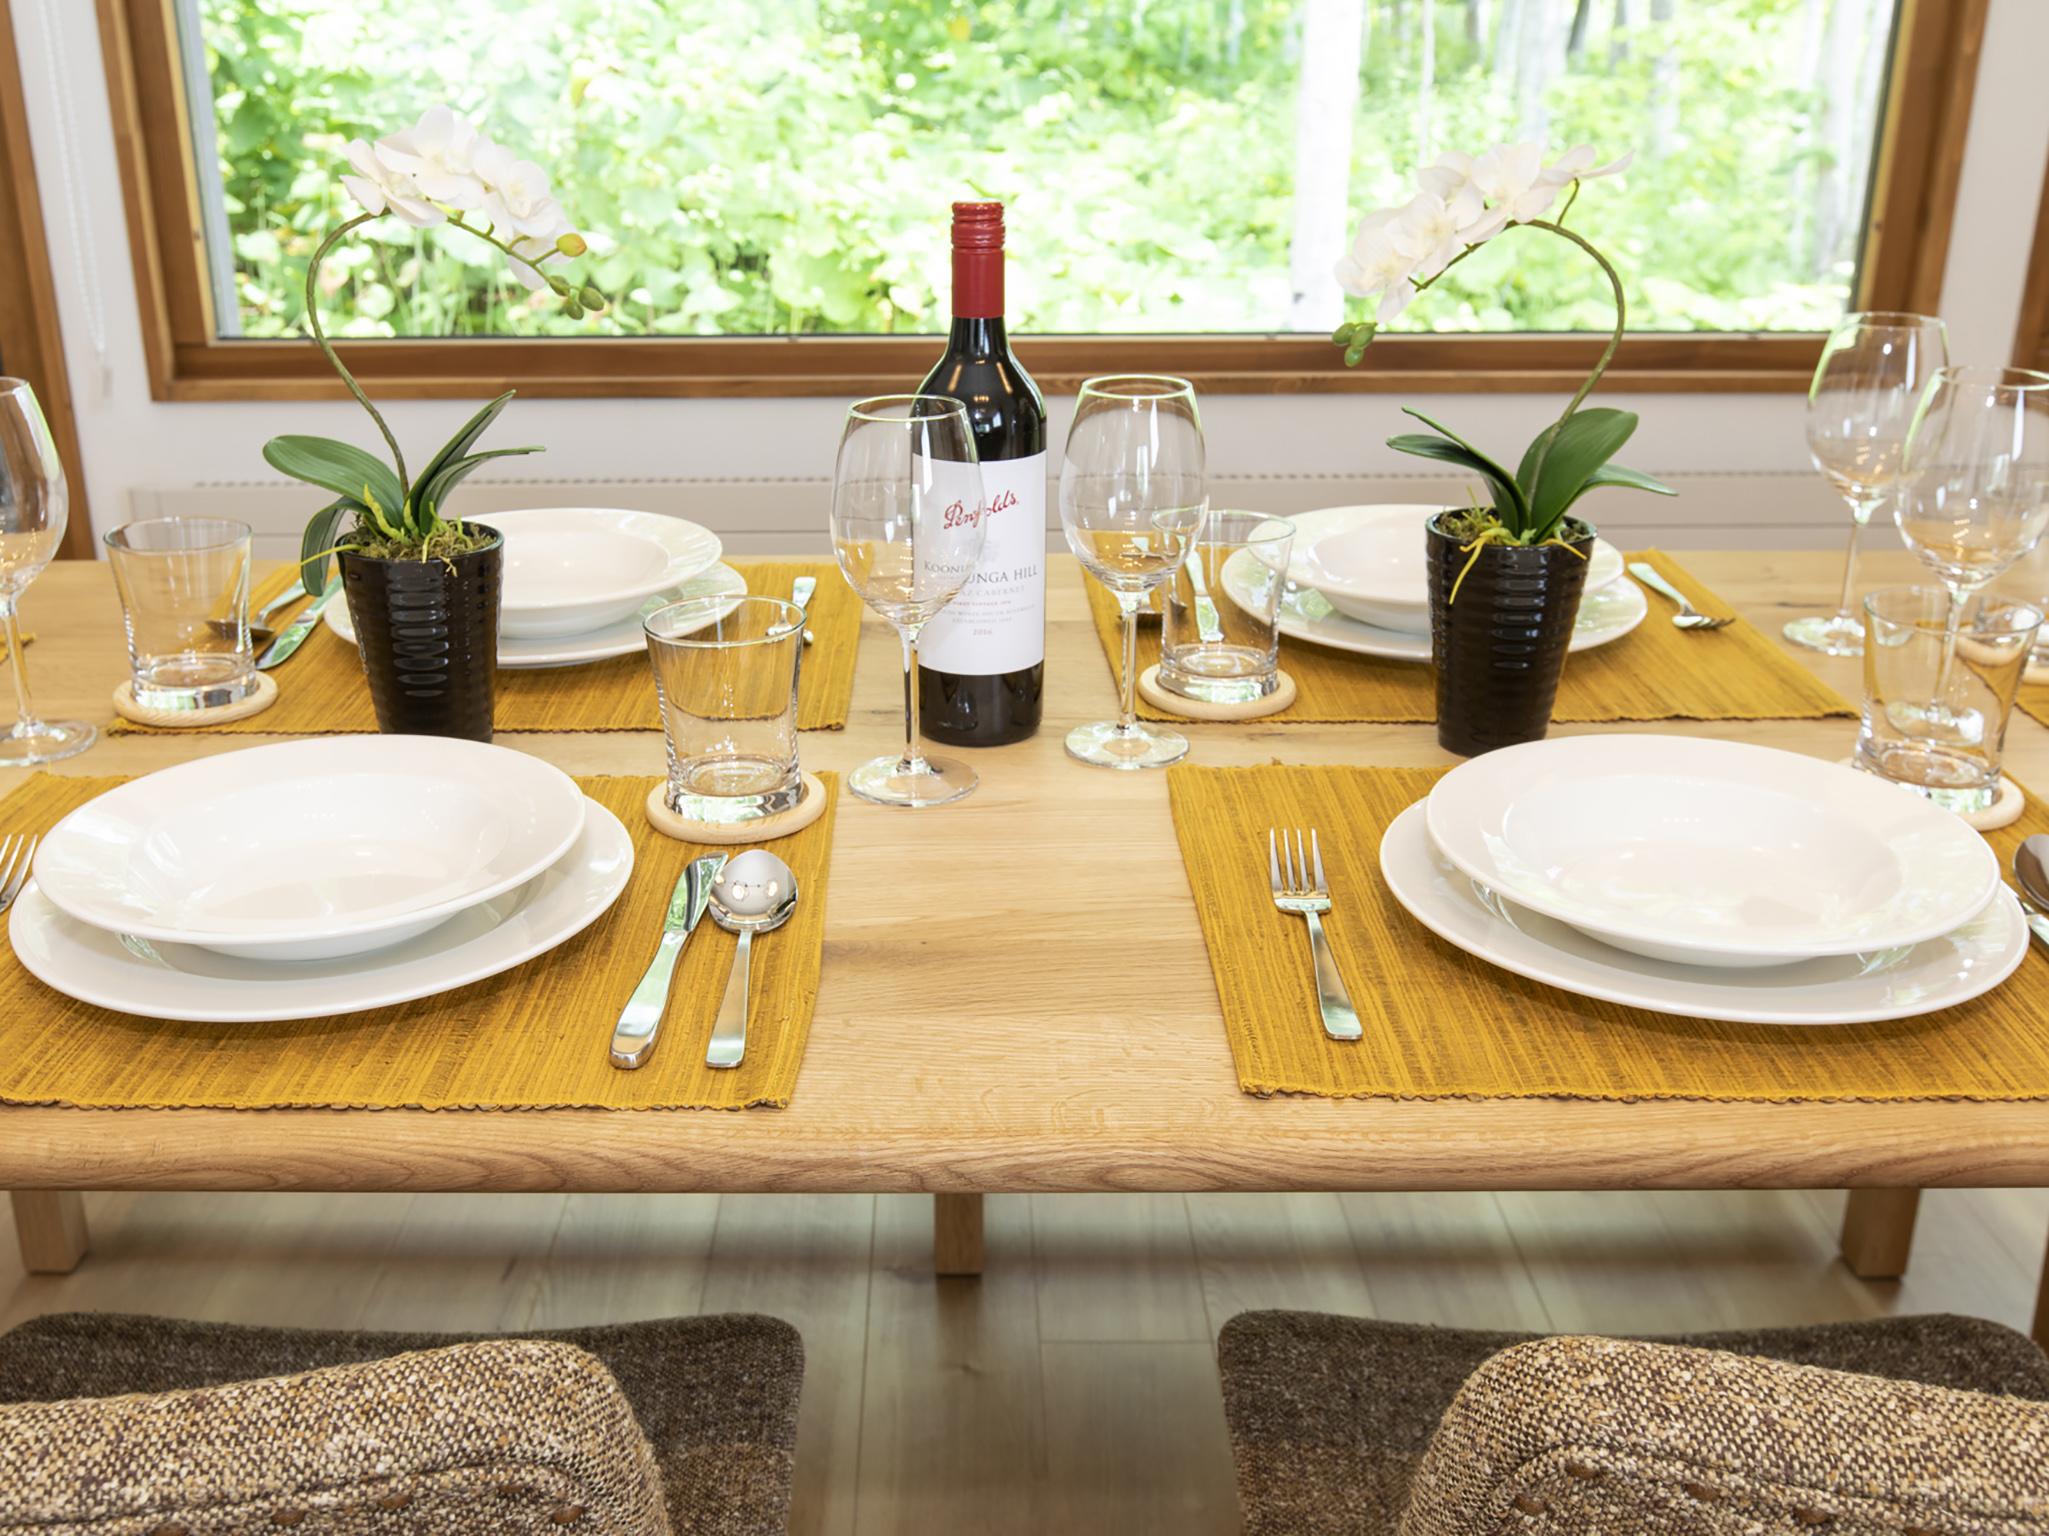 Birchwood Chalet - Elegant table setting